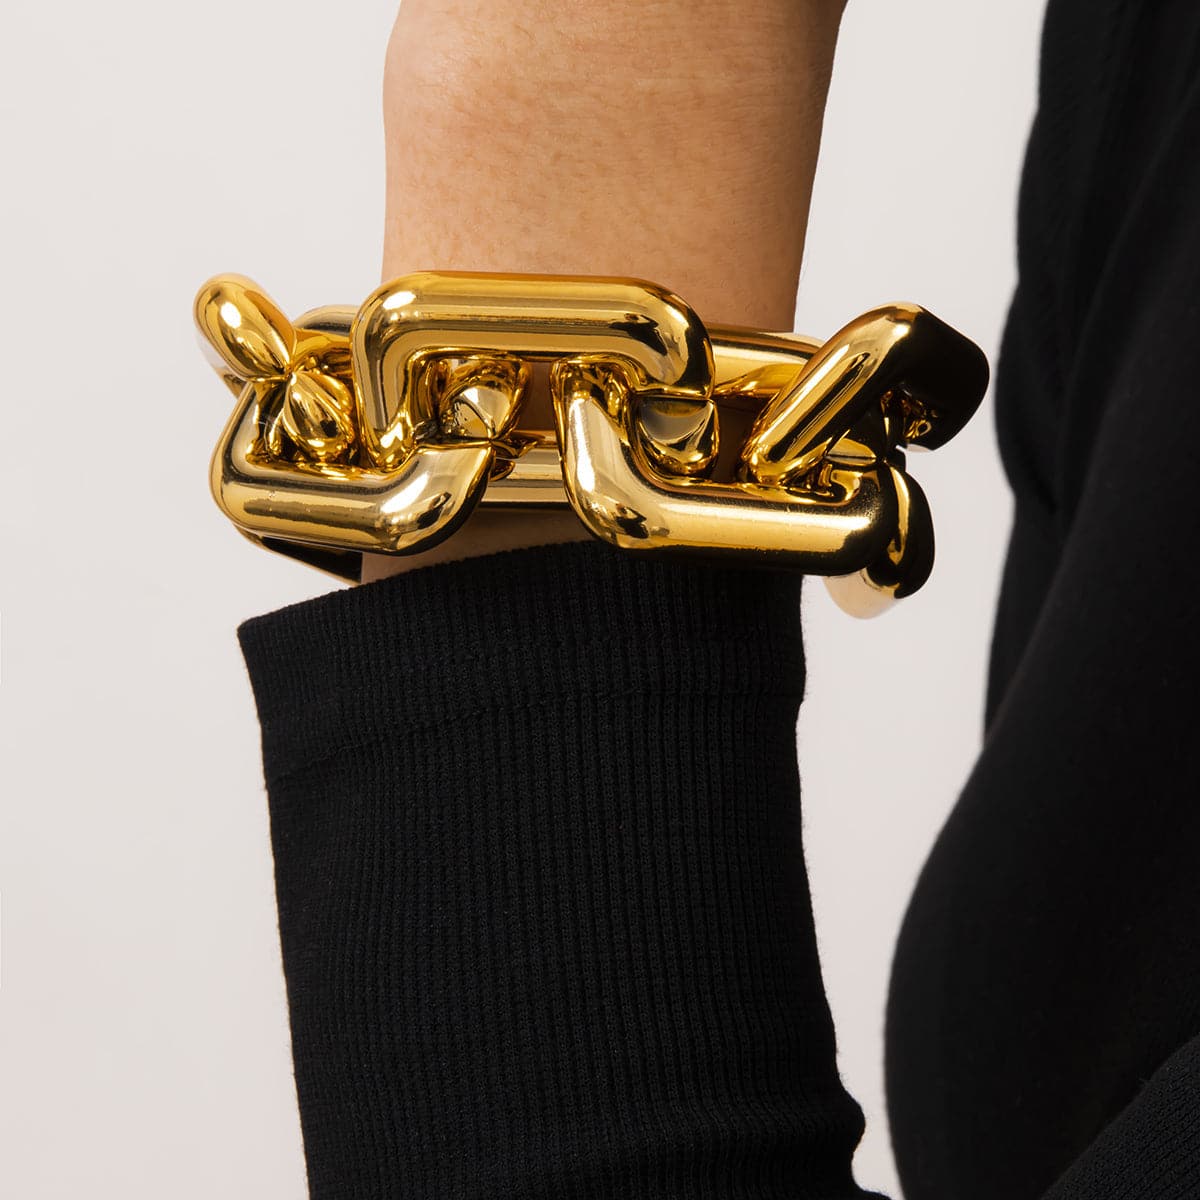 18K Gold-Plated Rectangle Chain Bracelet